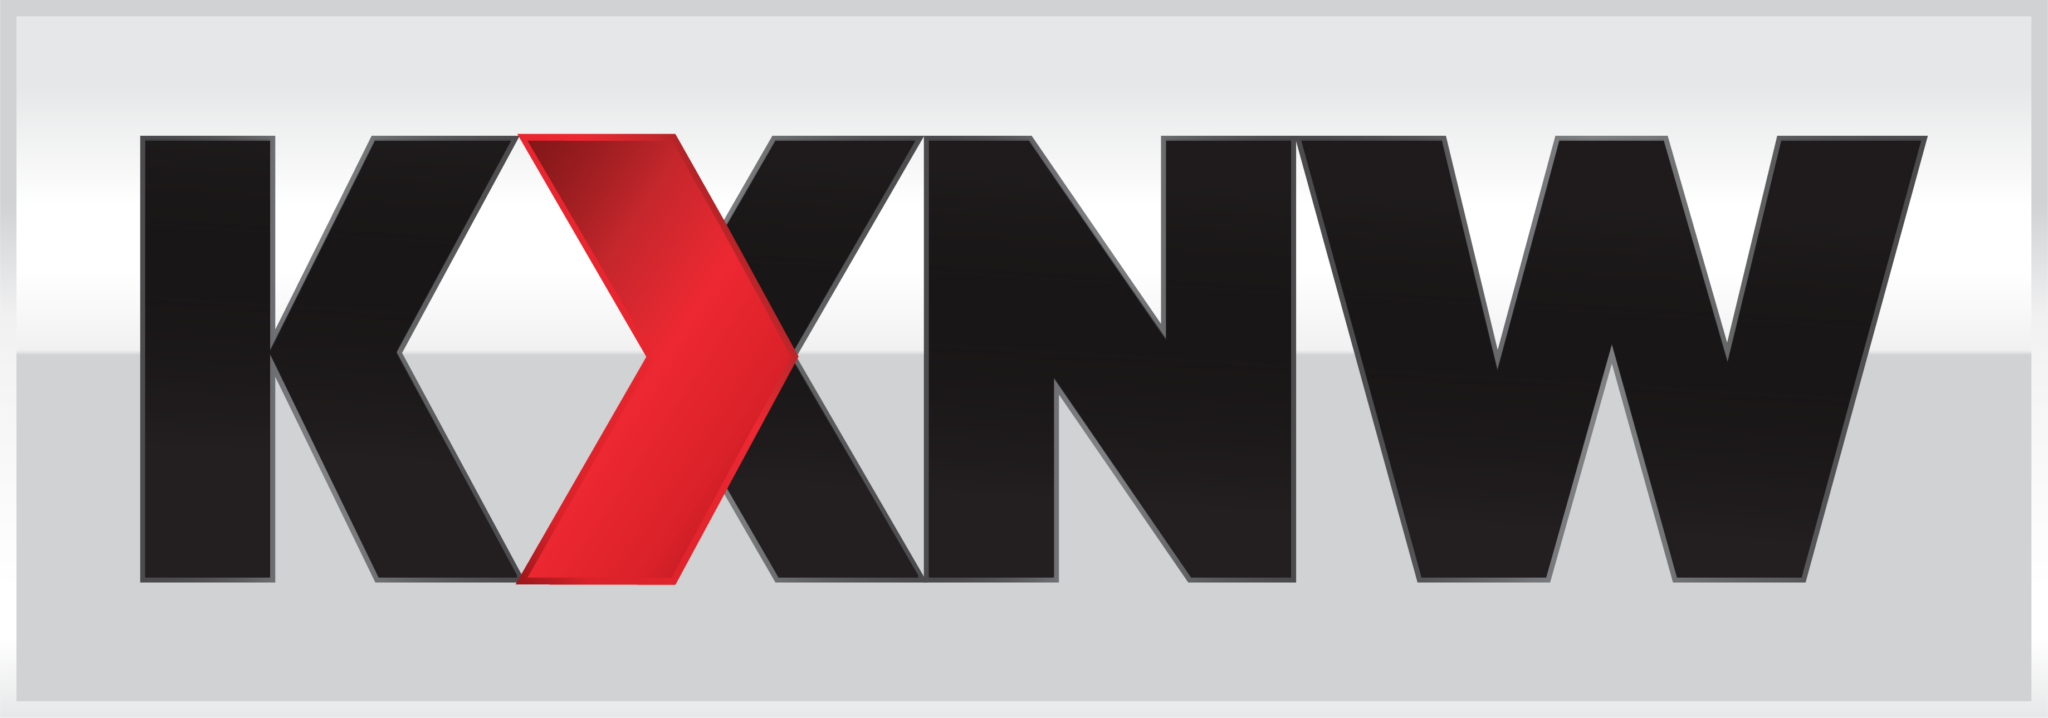 KXNW Logos on Plate